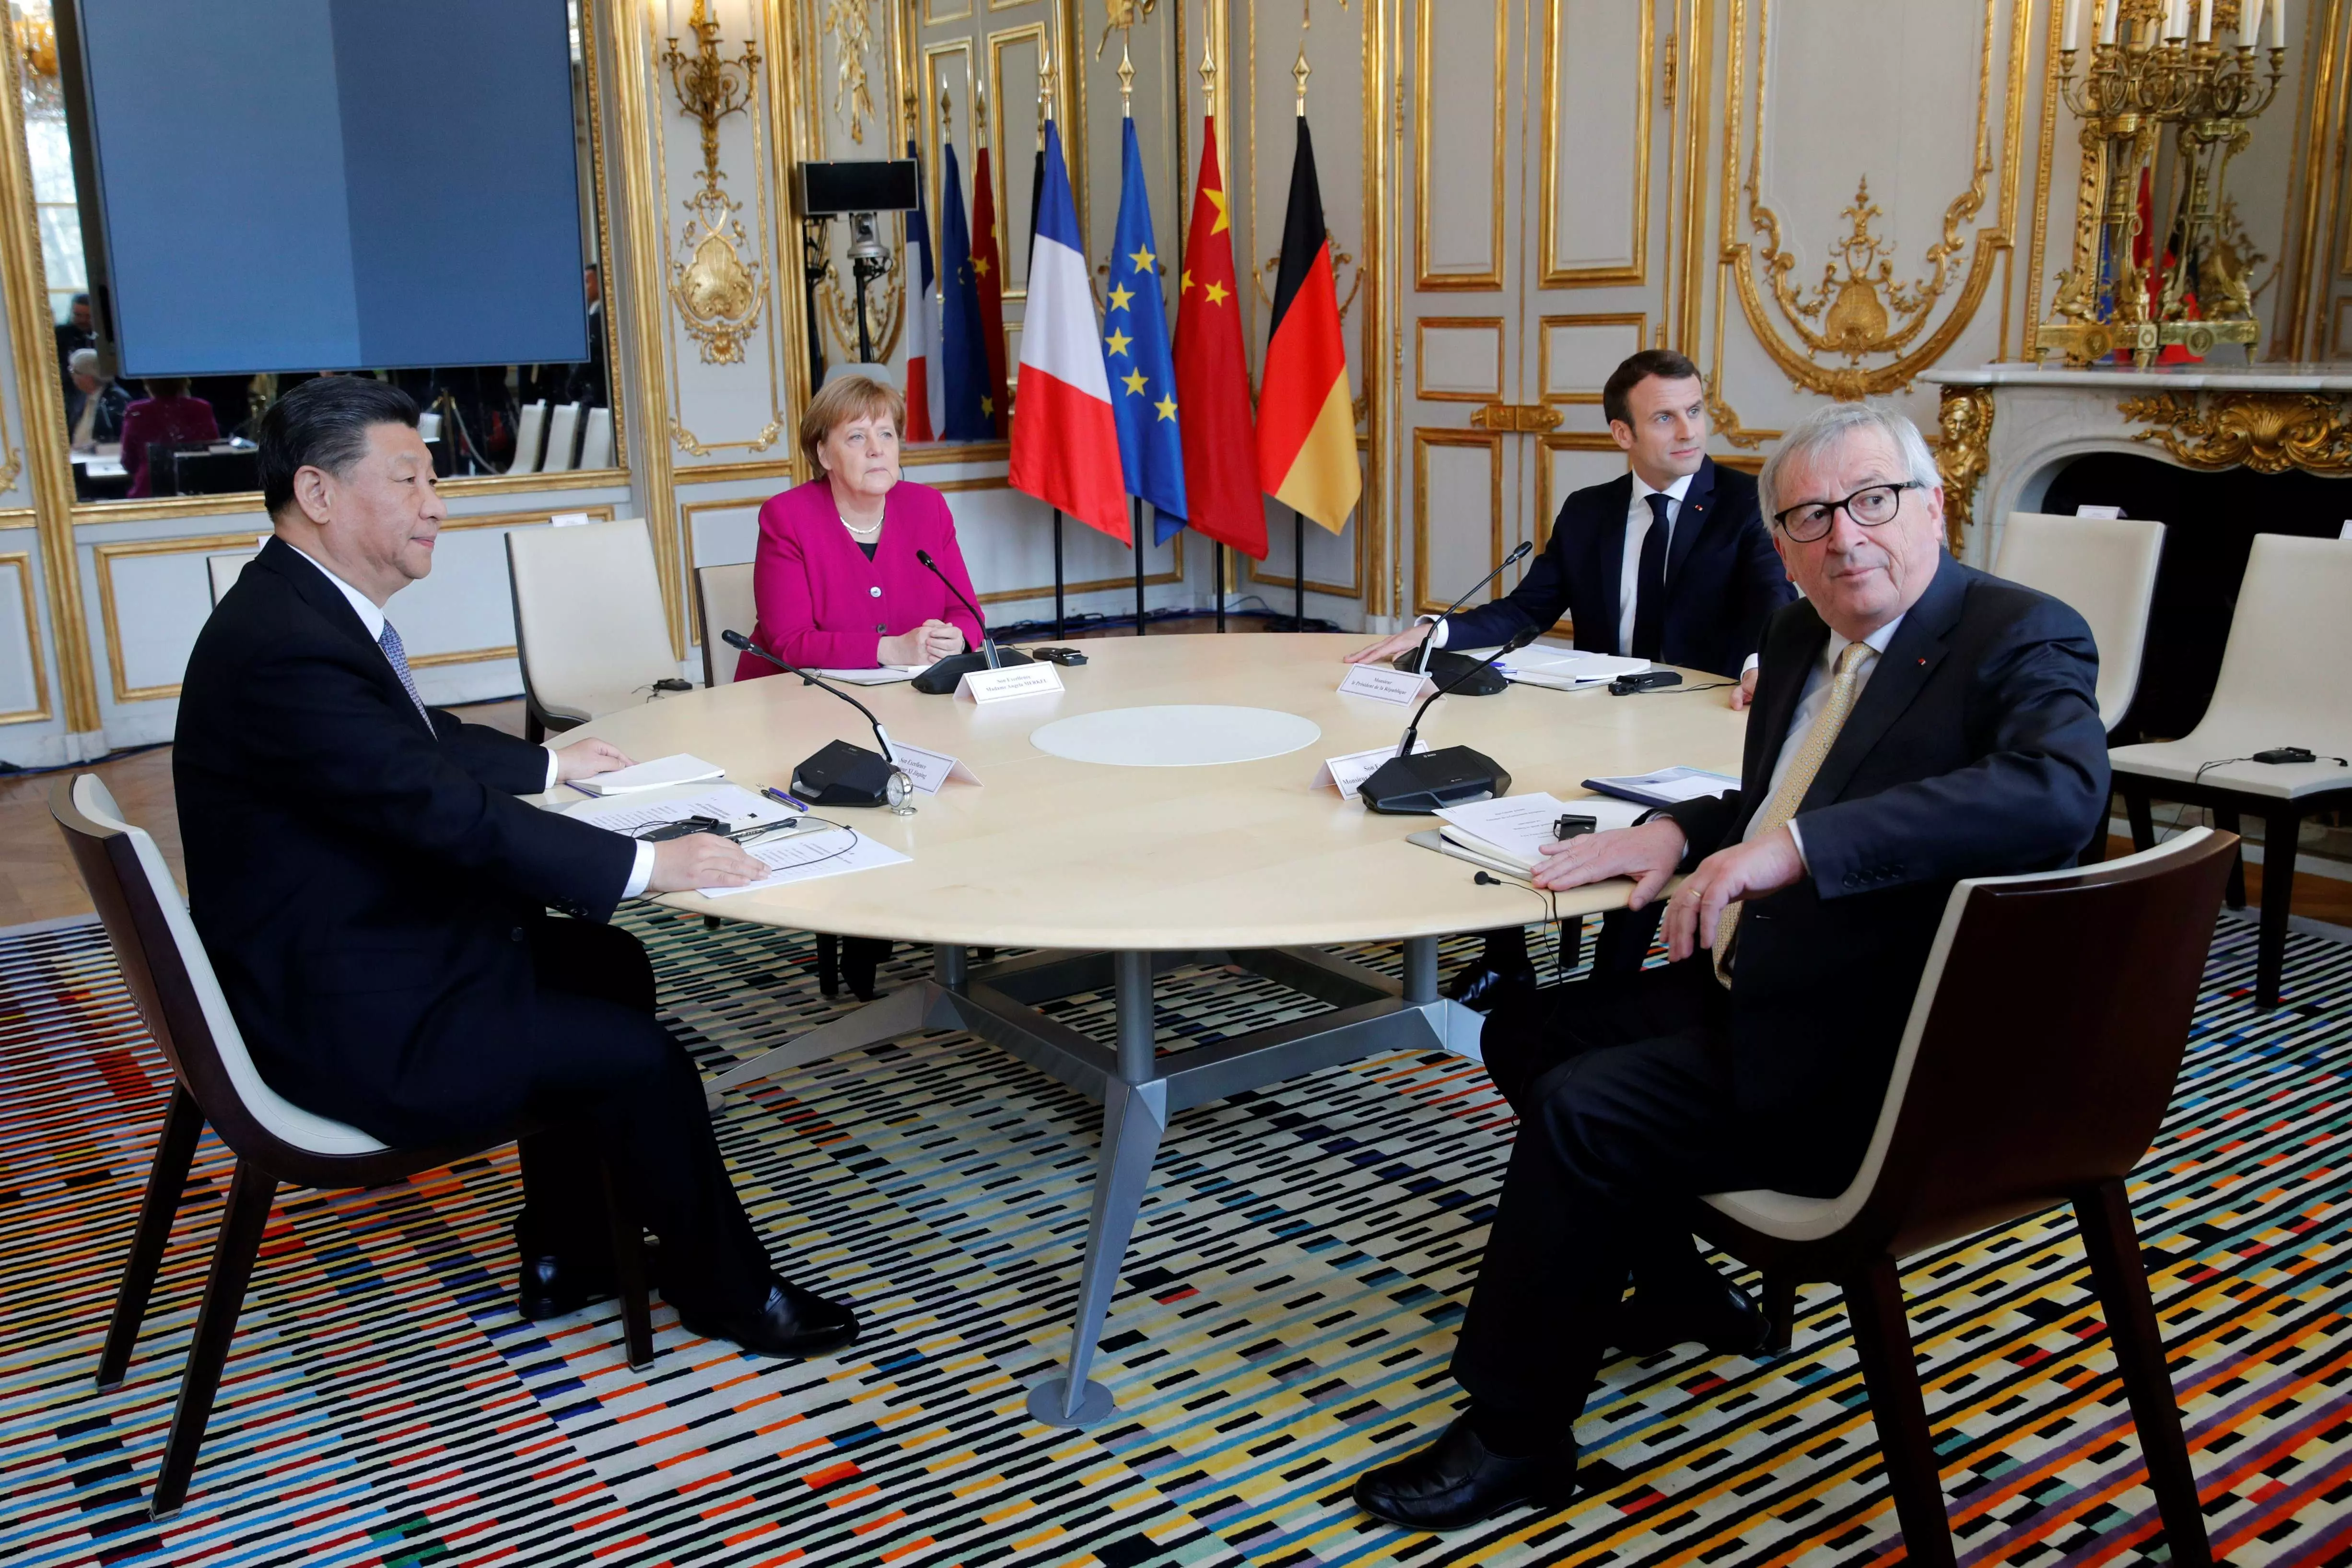 Зліва направо: Сі Цзіньпін, Ангела Меркель, Еммануель Макрон і Жан-Клод Юнкер в Парижі